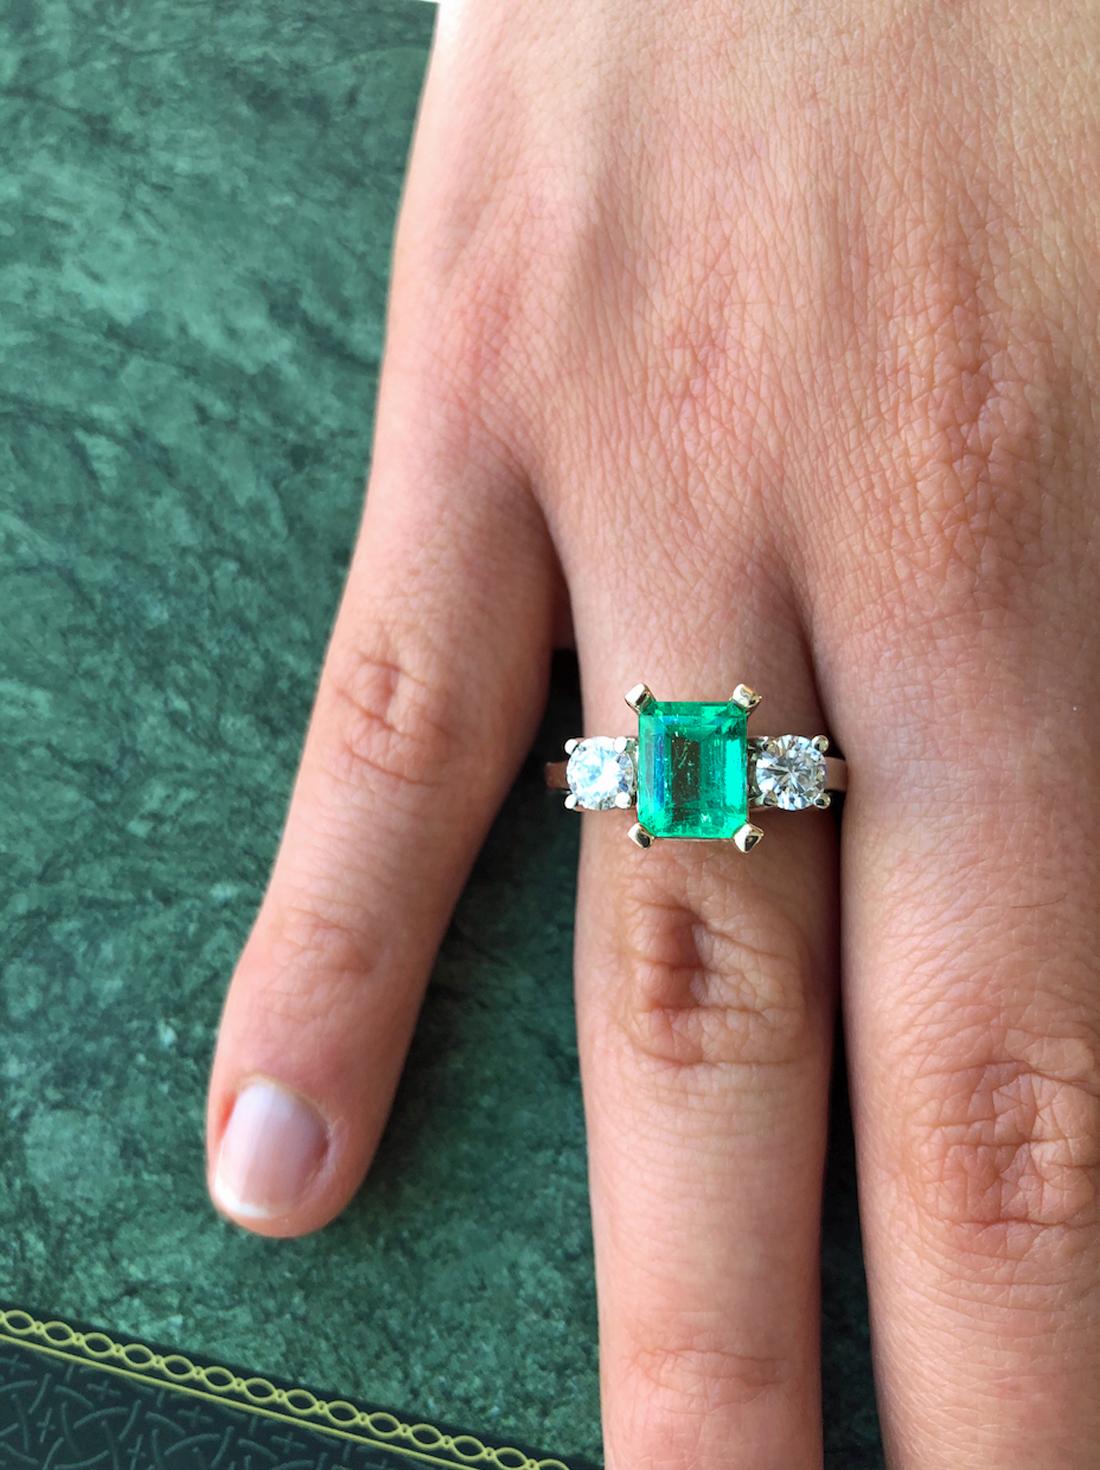 2.5 carat emerald ring